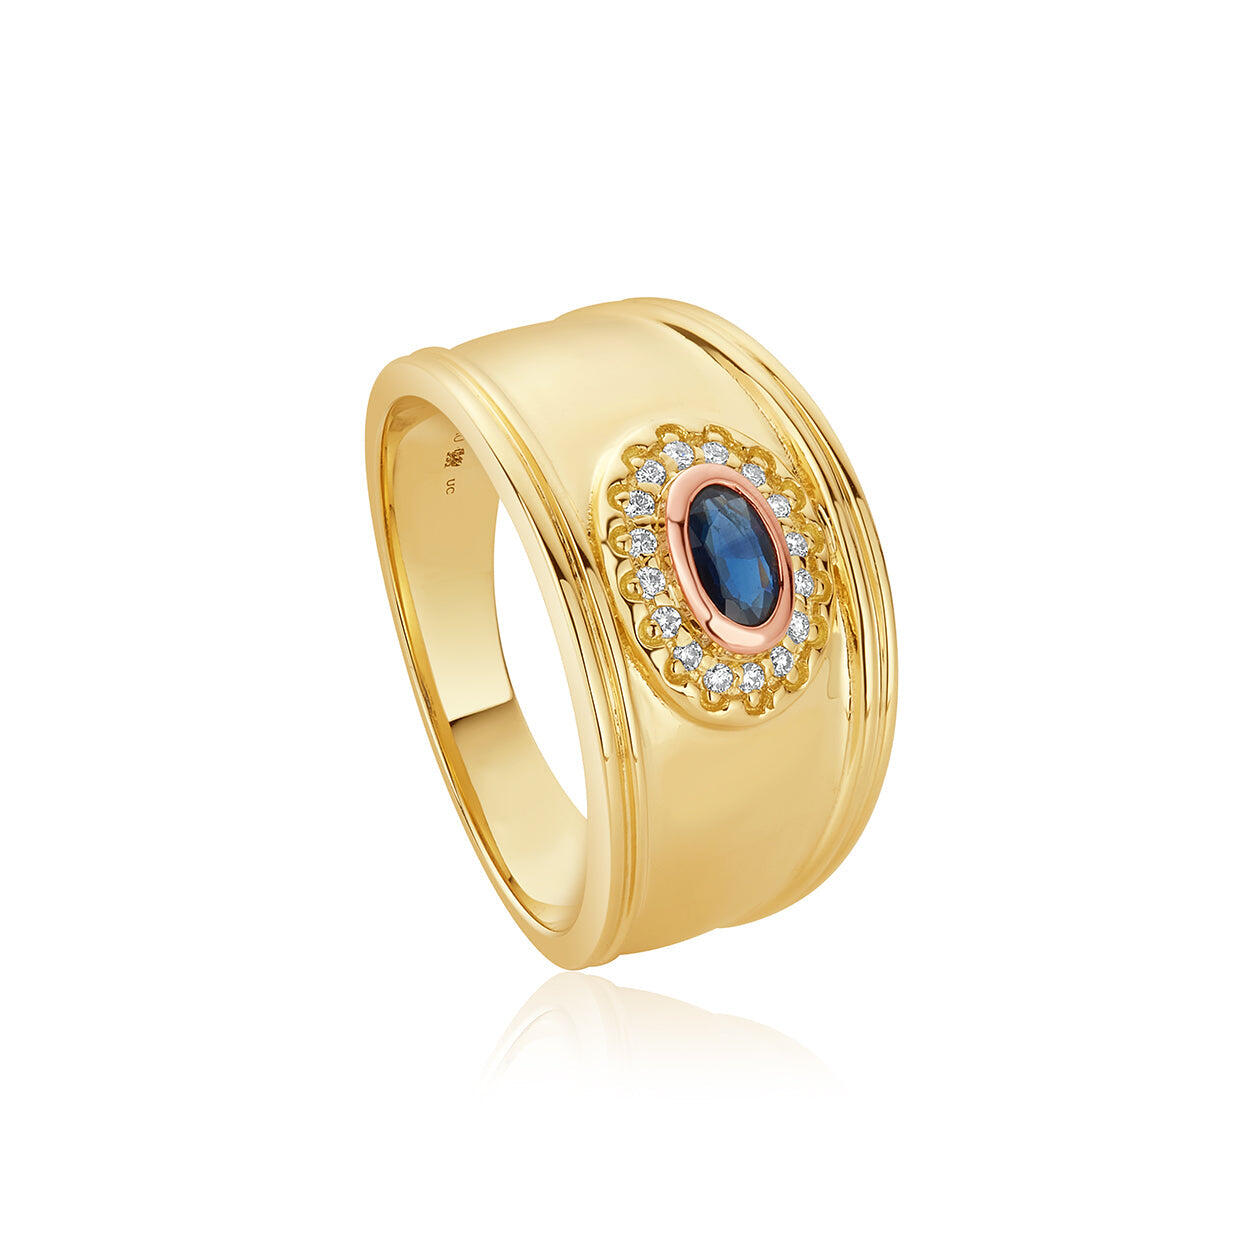 Clogau Princess Diana Sapphire Diamond 9ct Gold Ring - J